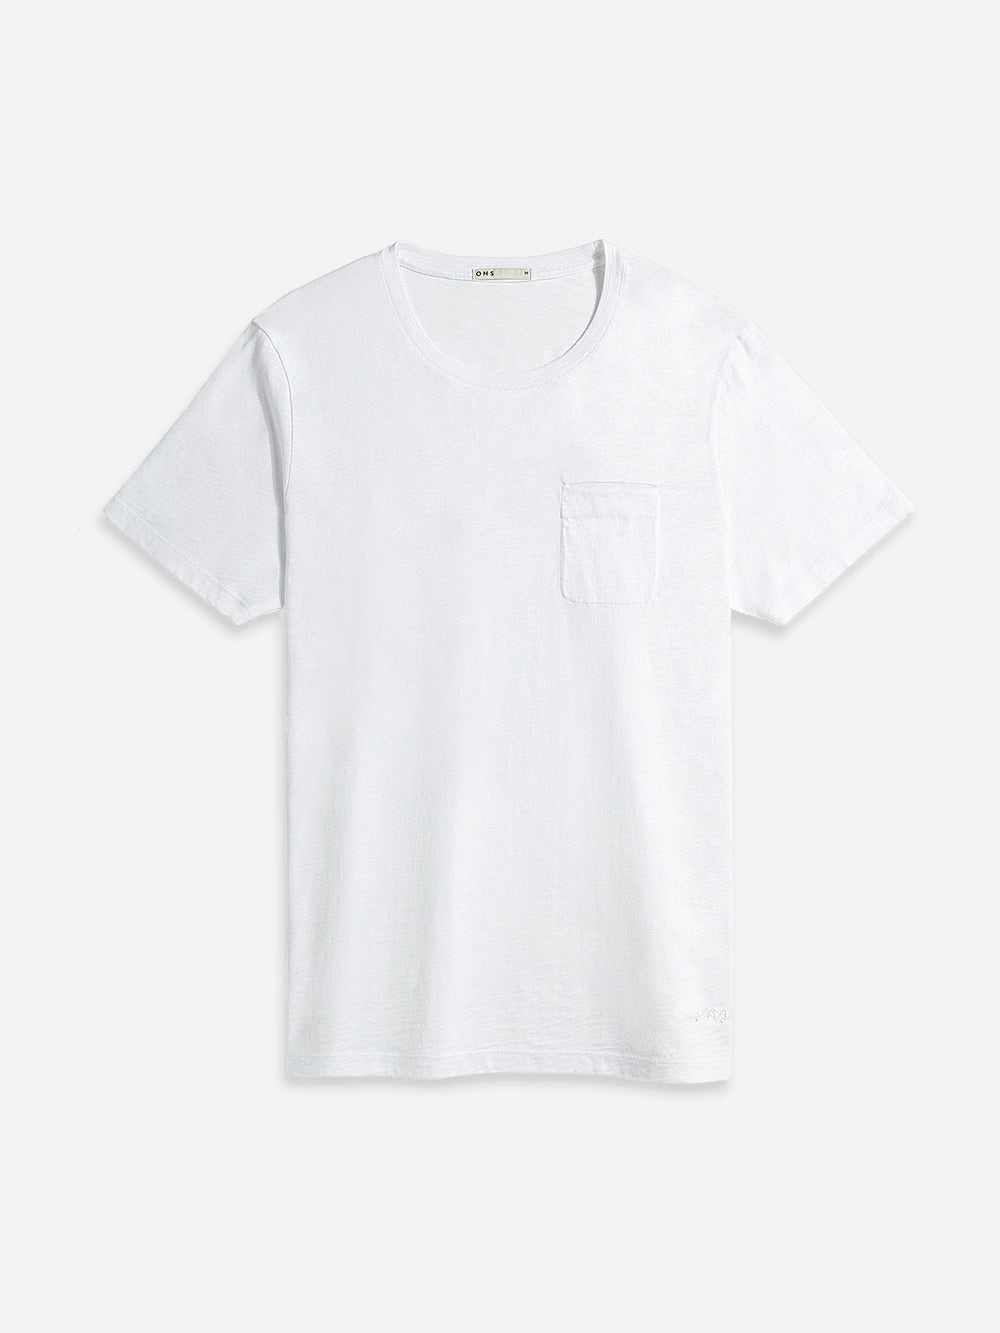 Bright White ONS Clothing Men's Bowery Slub Pocket tee in Bright White